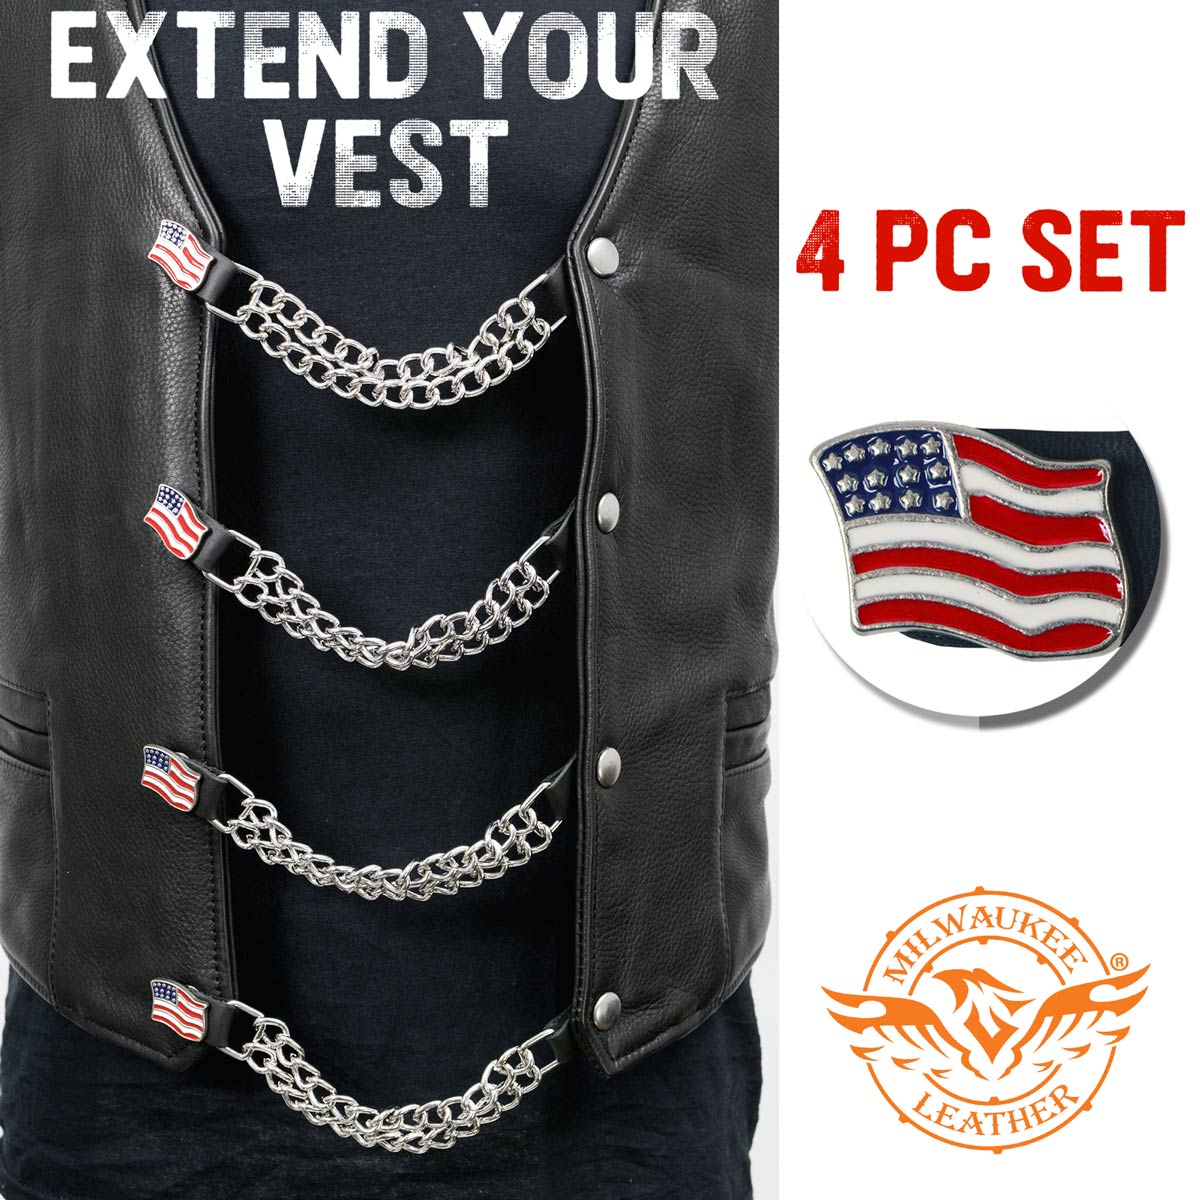 Milwaukee Leather American Flag Medallion Vest Extender - Double Chrome Chains Genuine Leather 8.5" Extension 4-PCS MLA6042SET